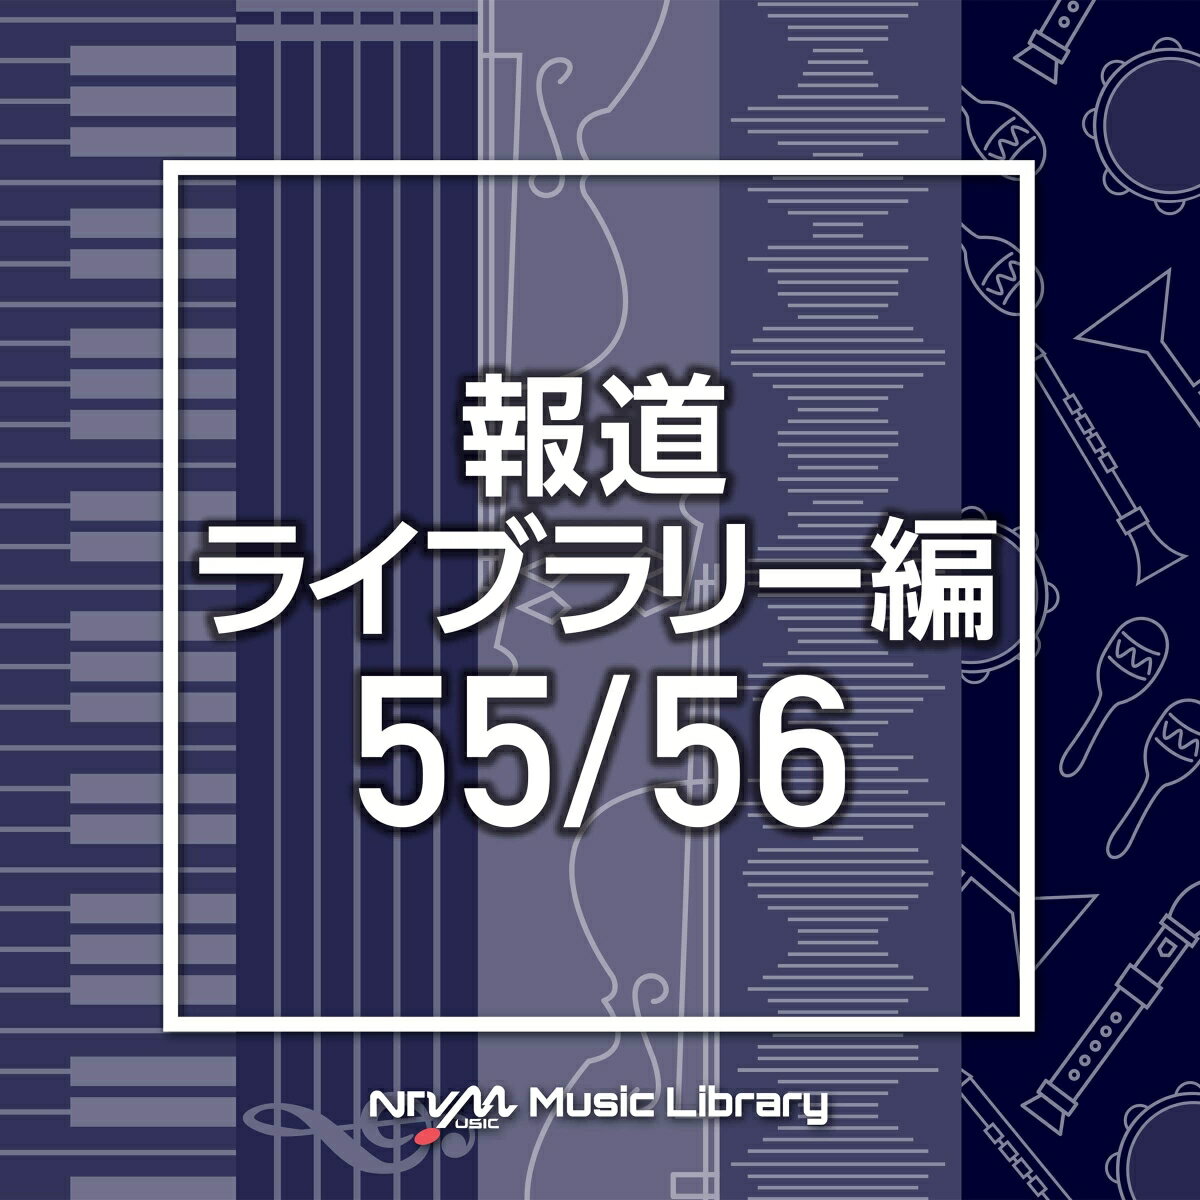 NTVM Music Library 報道ライブラリー編 55/56